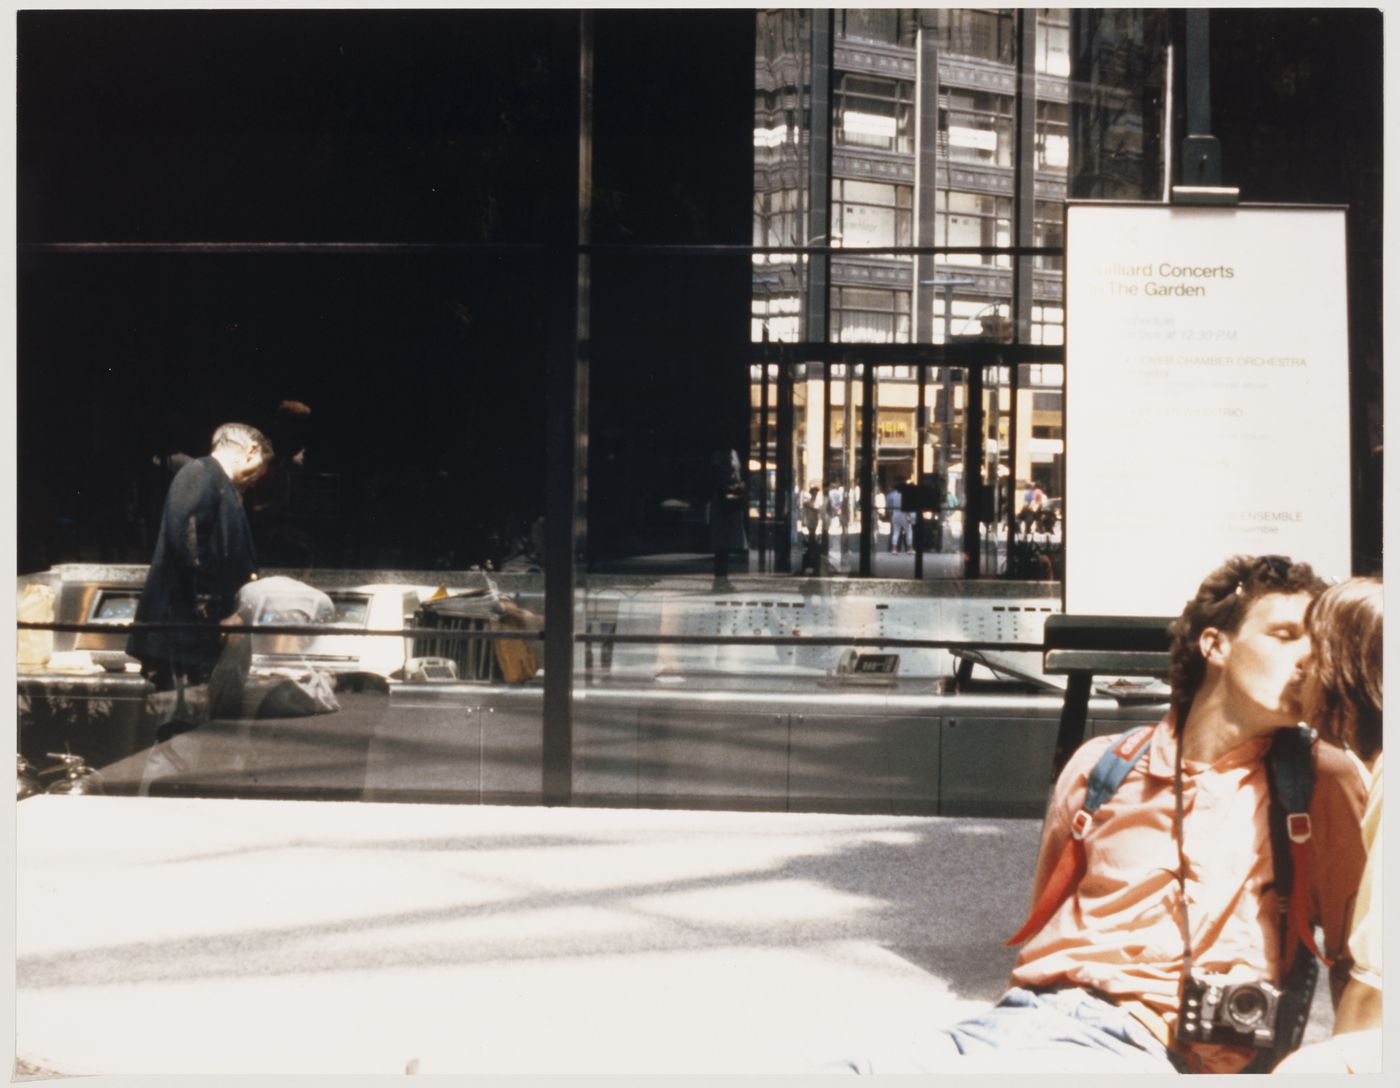 IBM Atrium, New York, N.Y.,  from the series "Private Public Spaces: The Corporate Atrium Garden"